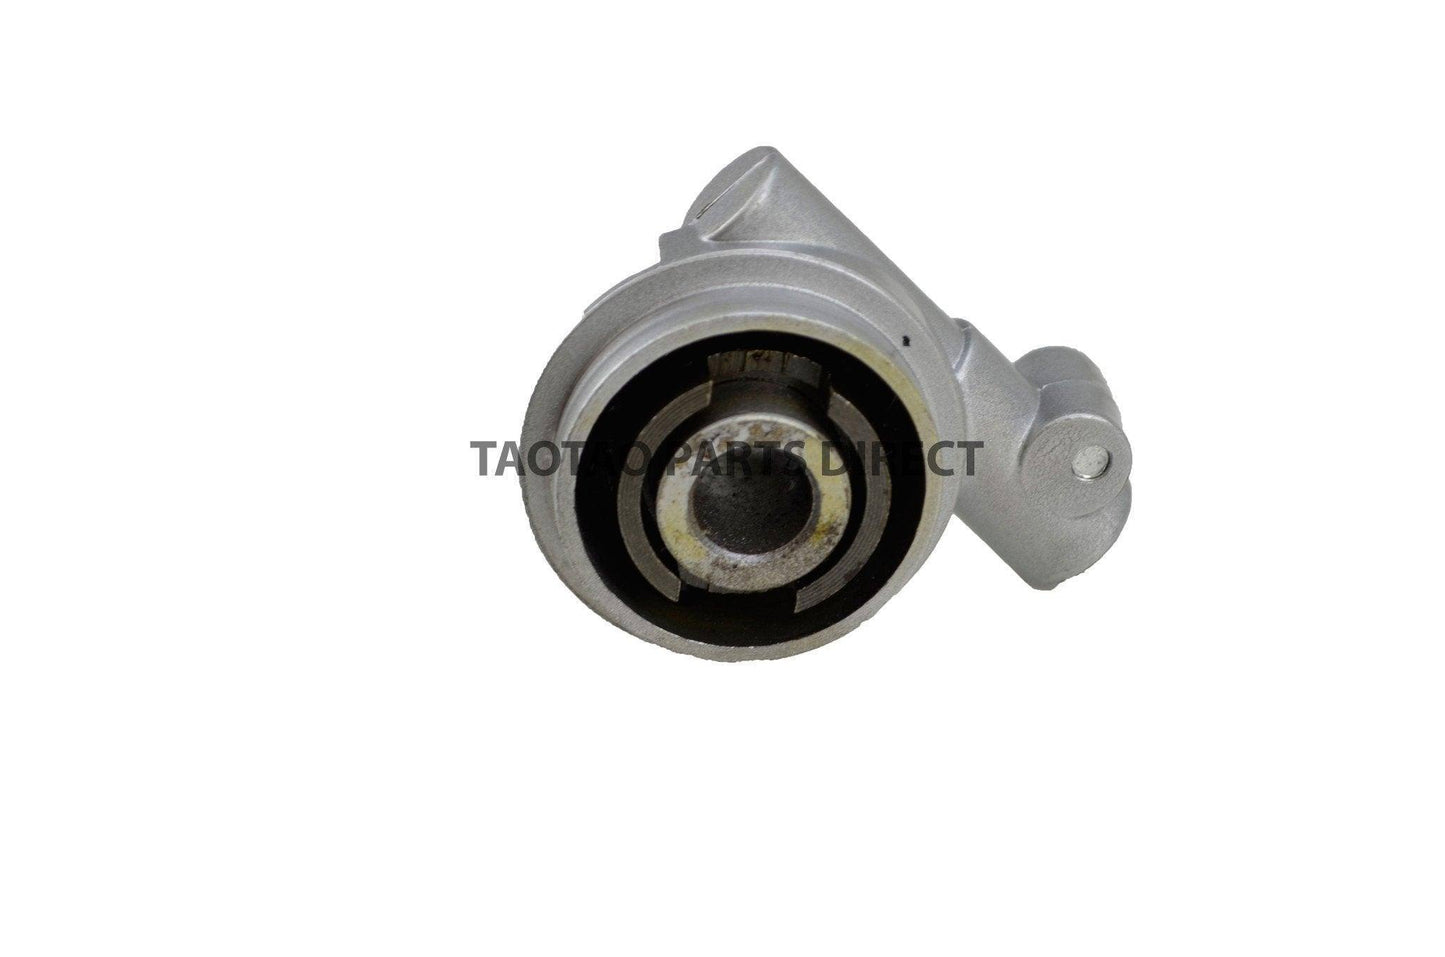 Lancer 150 Speed Sensor - TaoTao Parts Direct